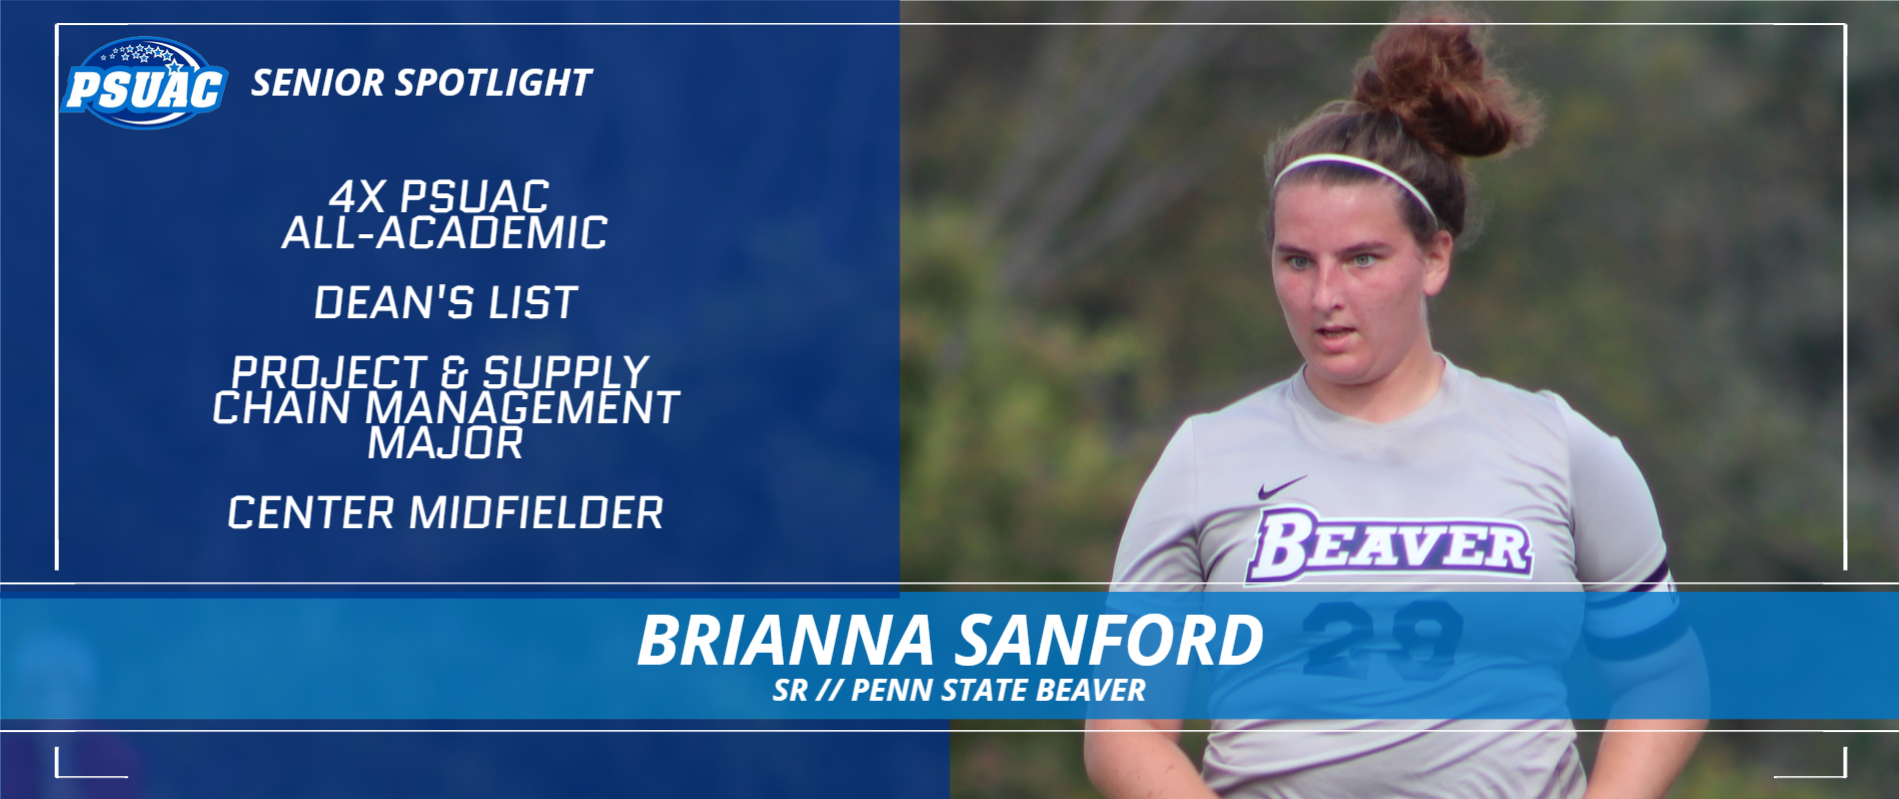 Penn State Beaver's Brianna Sanford.